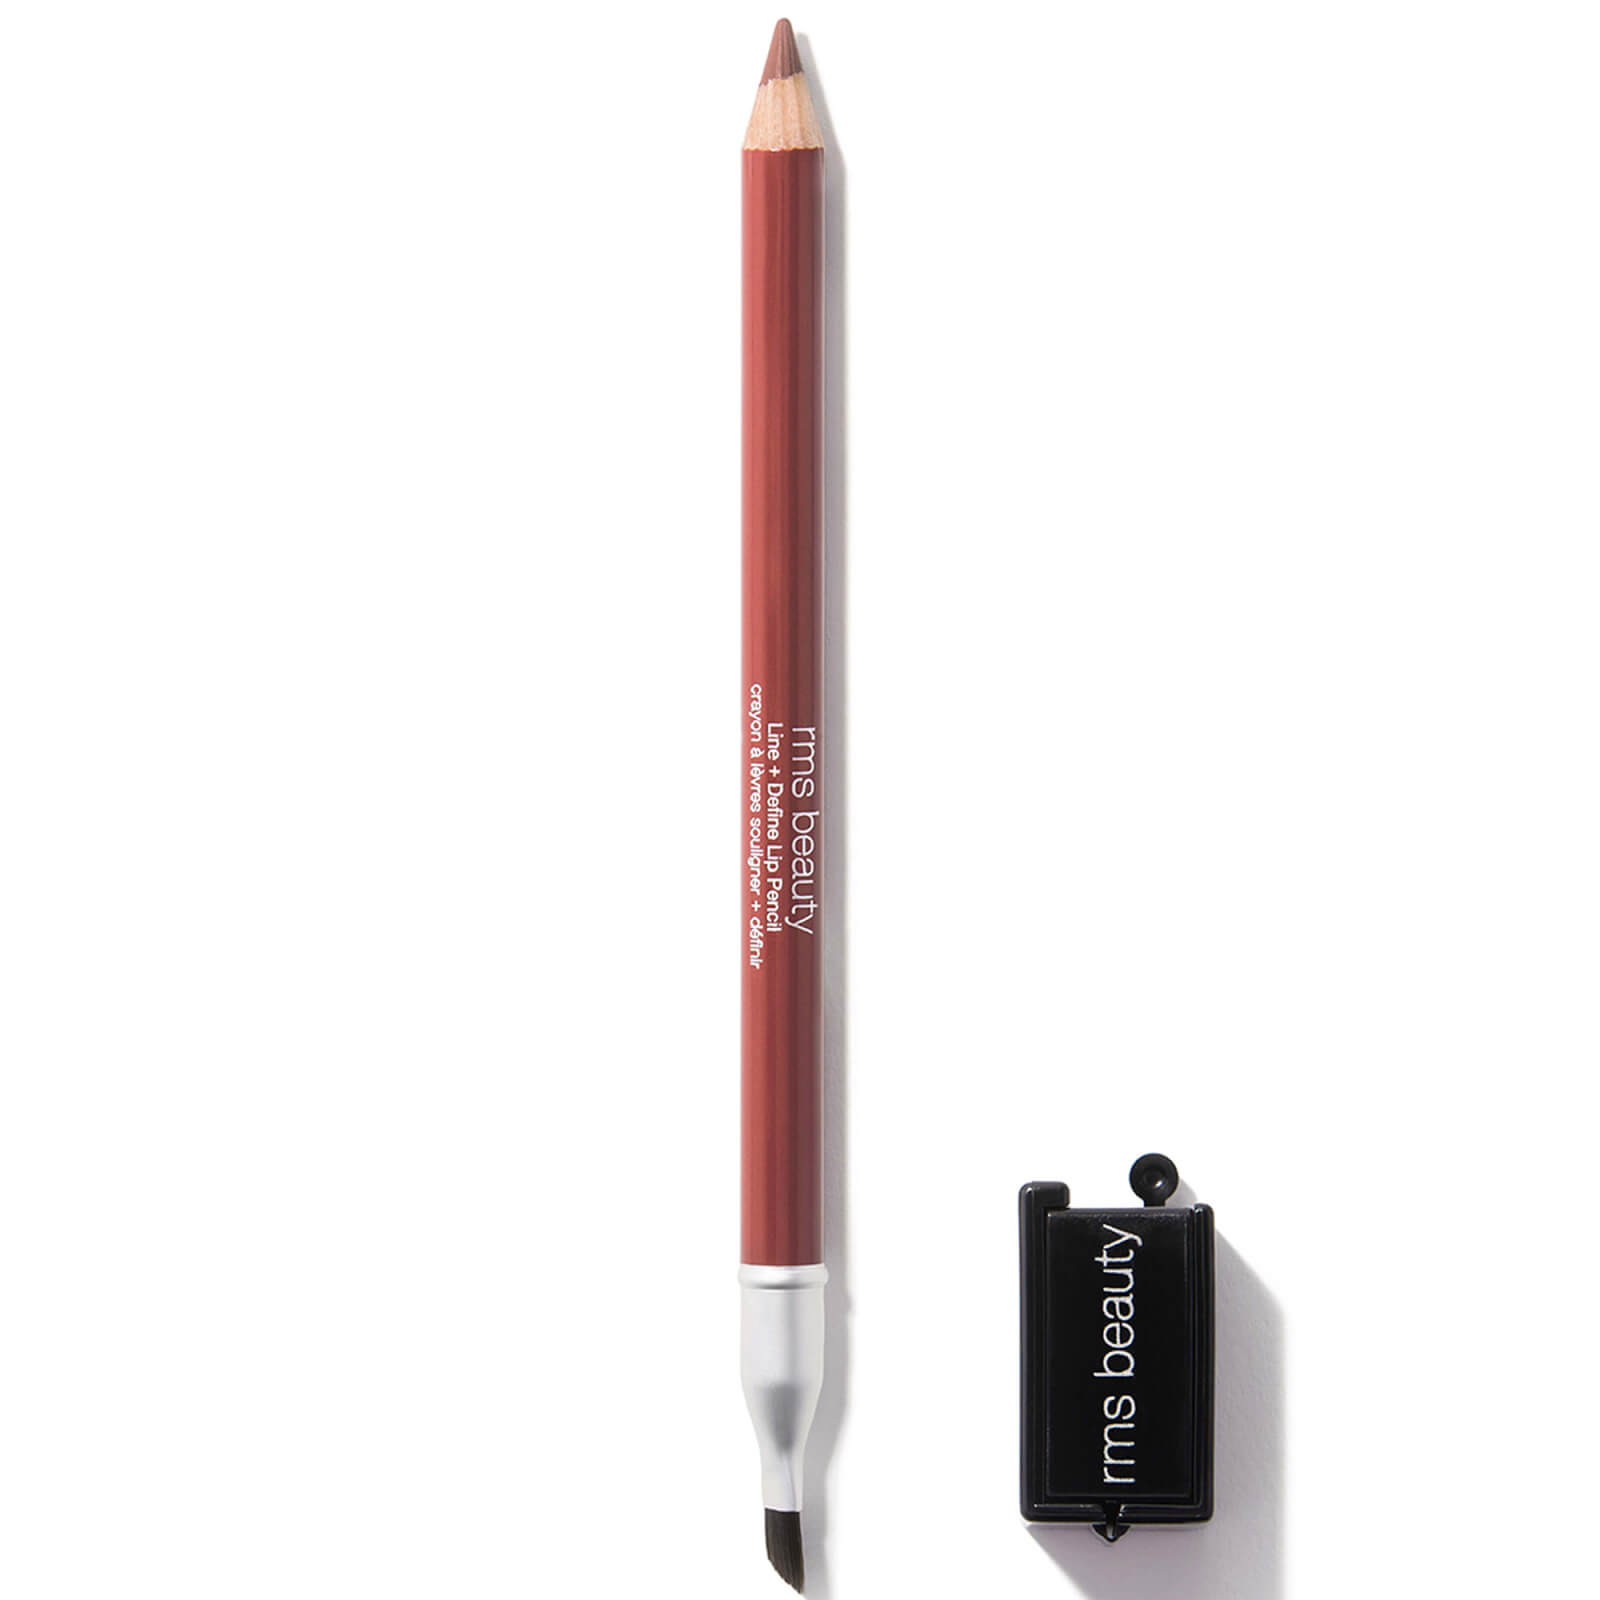 Rms Beauty Go Nude Lip Pencil 1.08g (various Shades) - Nighttime Nude